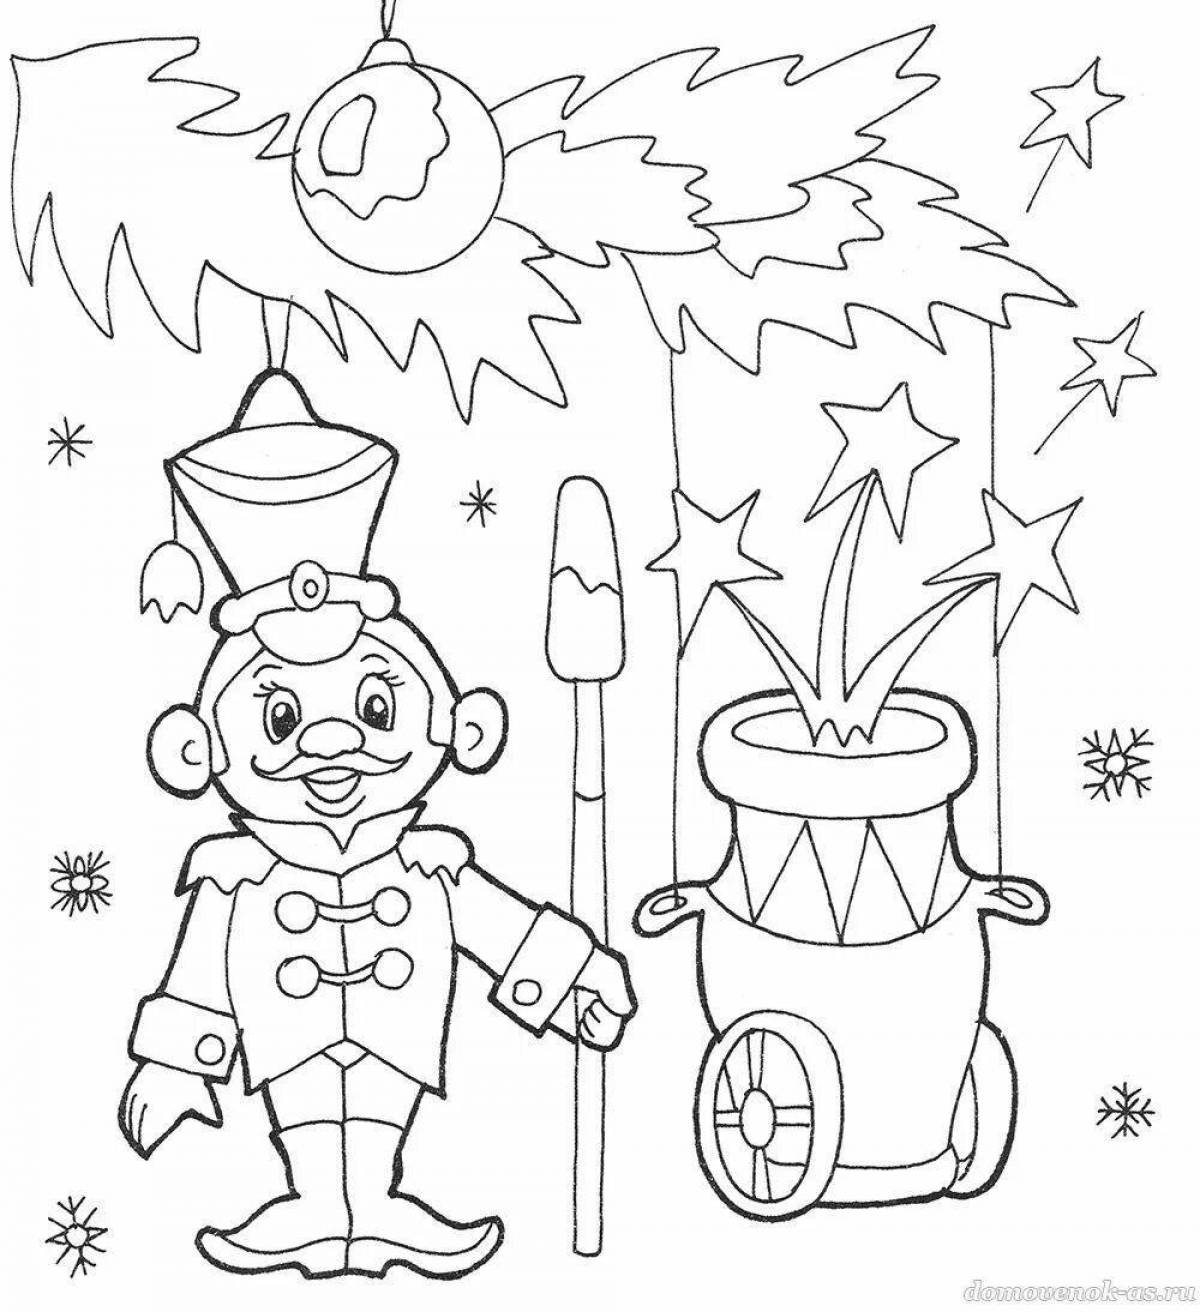 Magic Christmas coloring book